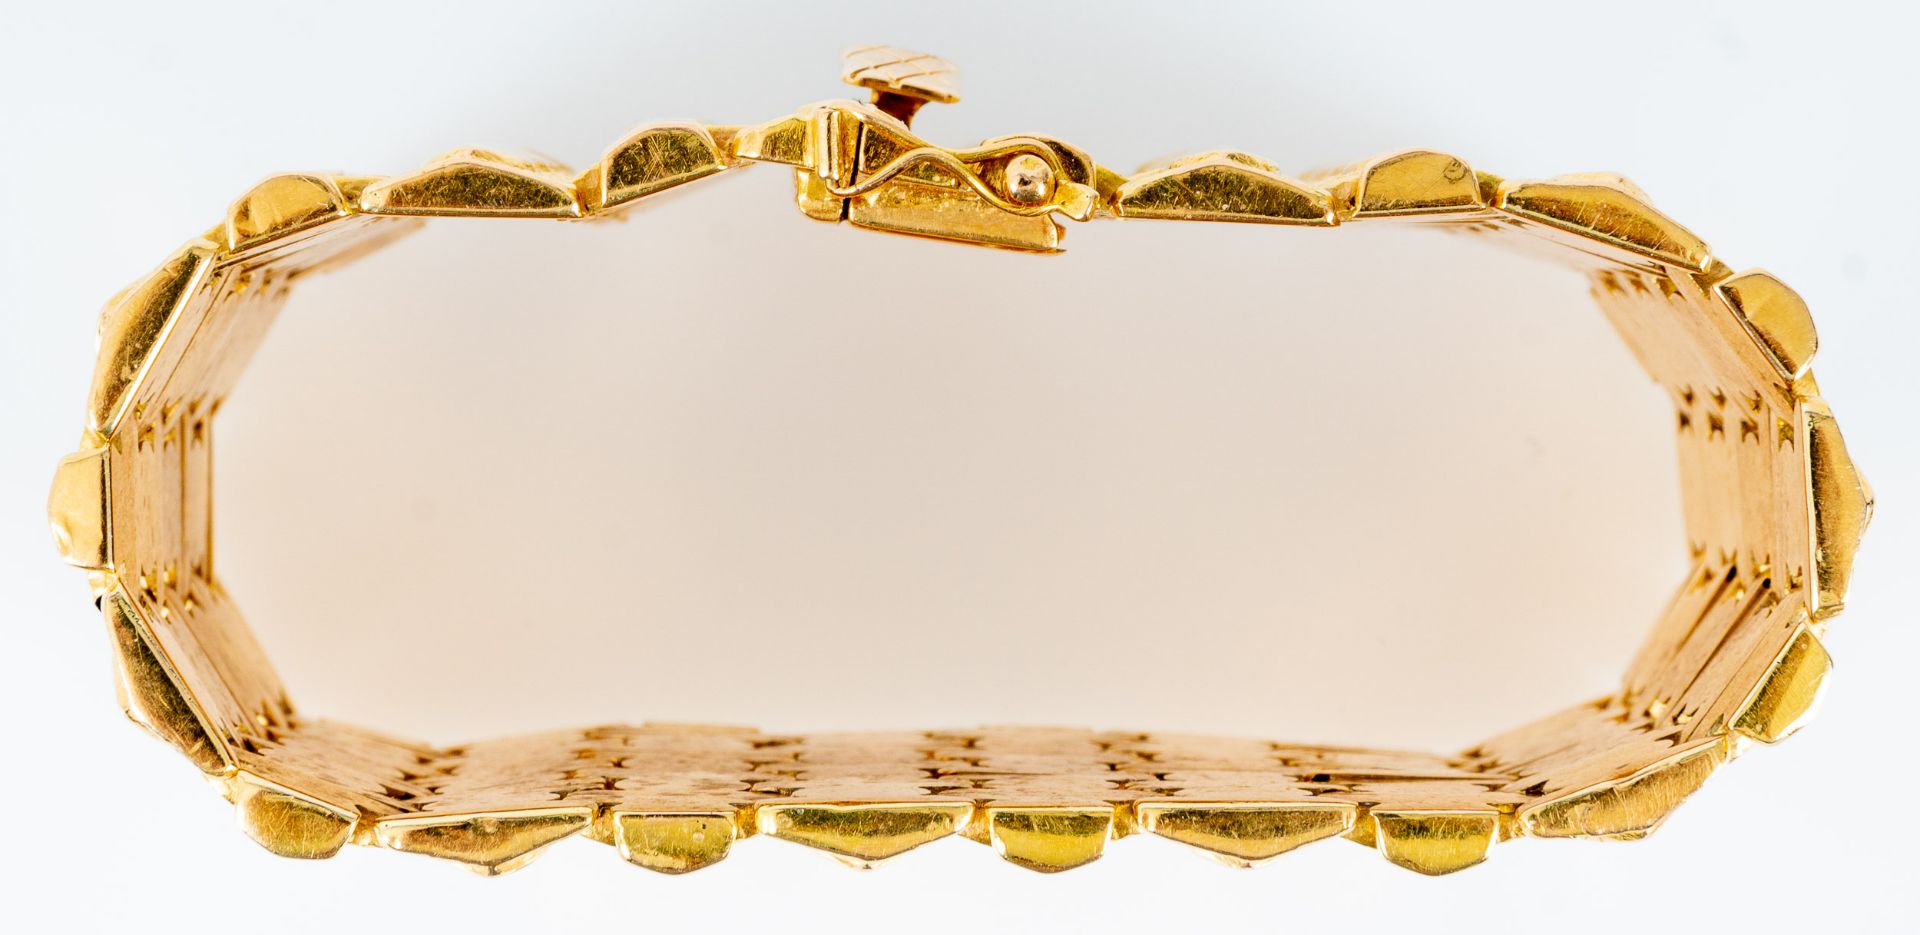 Breites Armband, sogen. "Teppich" - Armband aus 750er Gelbgold, gestempelt: "262 VI IALE 750"; ca. - Image 4 of 11